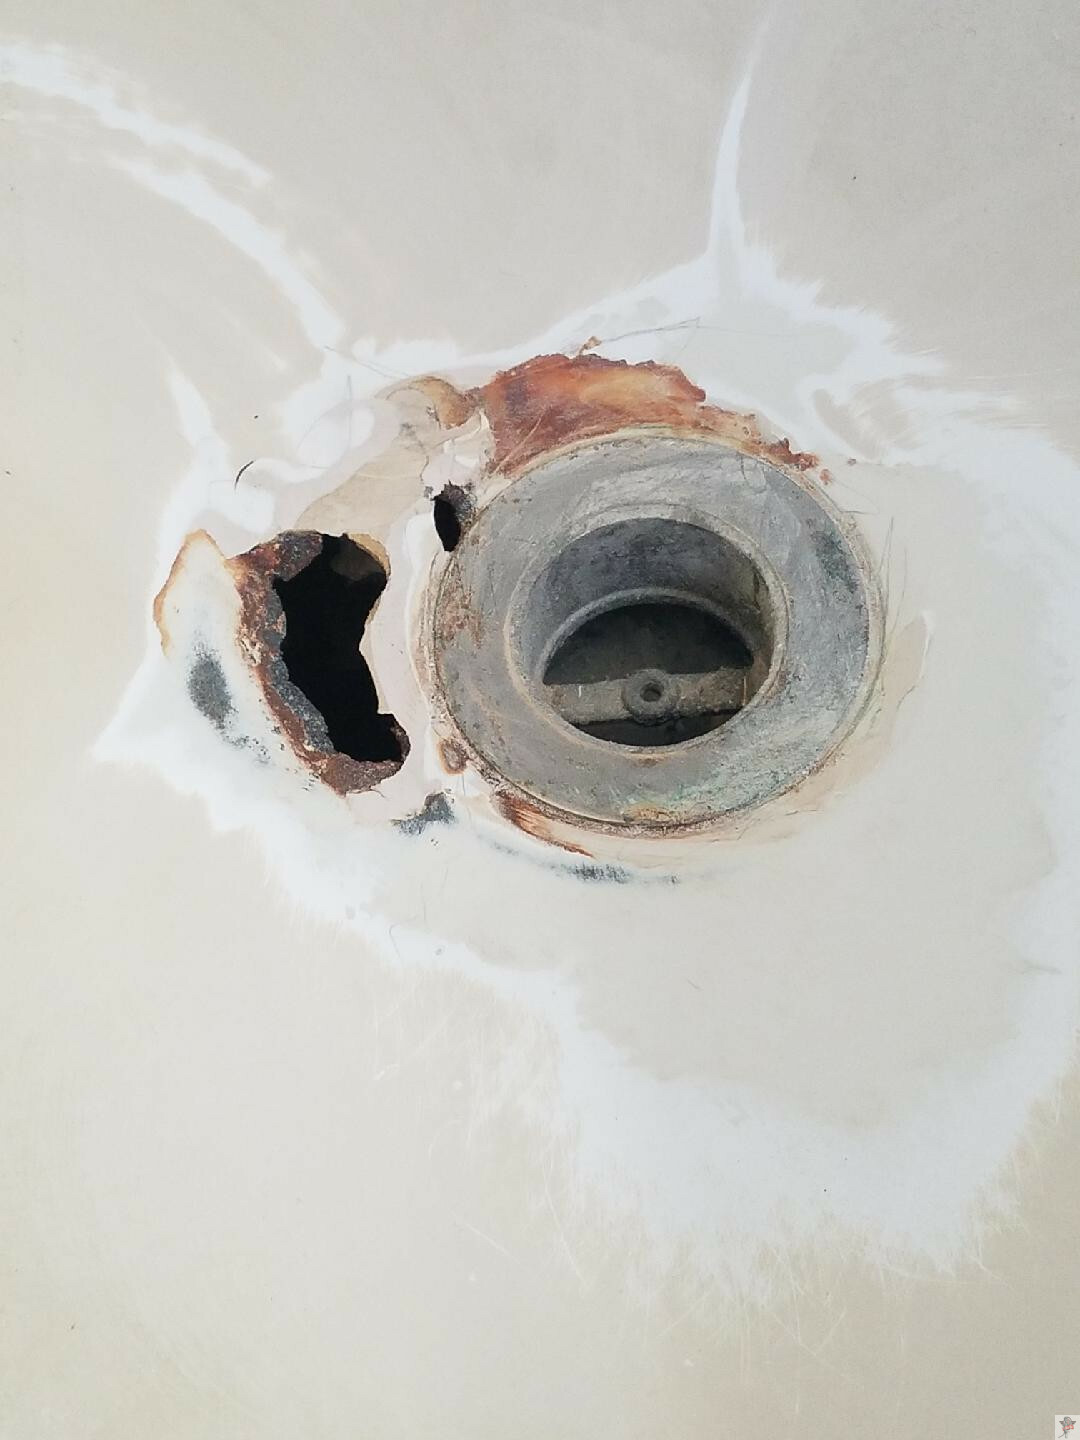 Tub Refinishing Repair Rust More, How To Fix Rusted Bathtub Drain